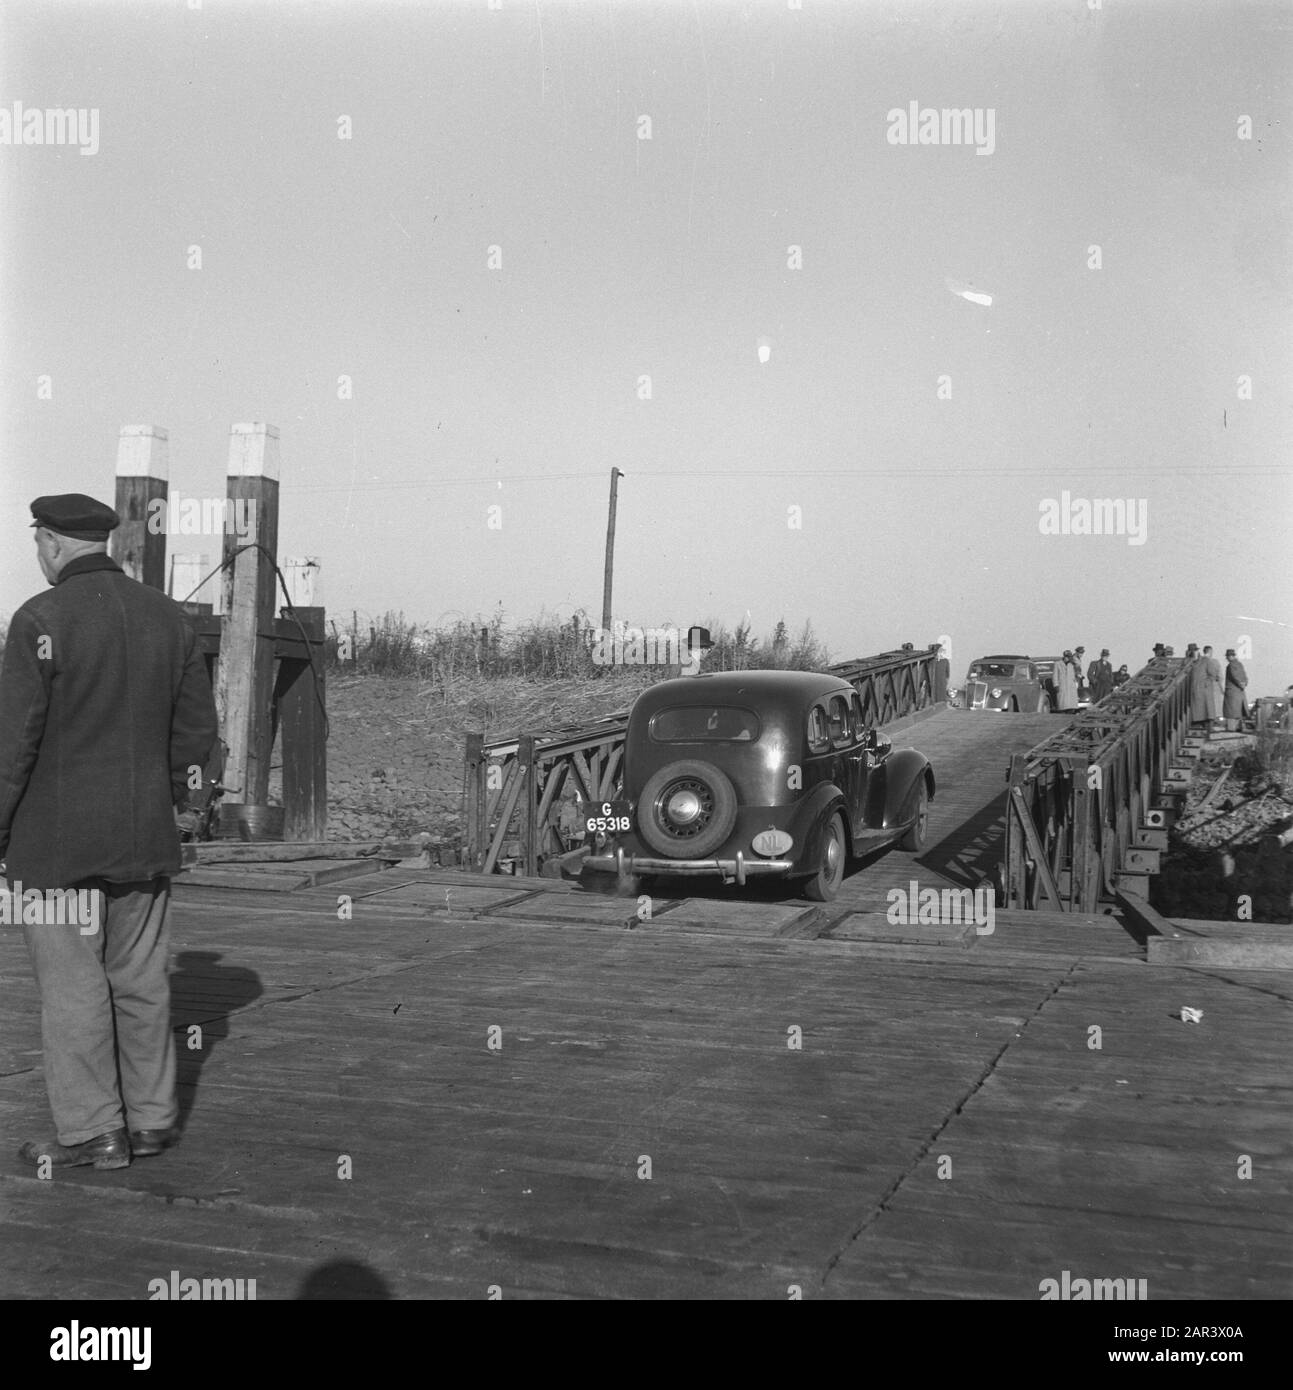 [Schouwen-Duiveland] Data: 1945 luogo: Schouwen-Duiveland Parole Chiave: Automobili, ponti, uomini, seconda guerra mondiale Foto Stock